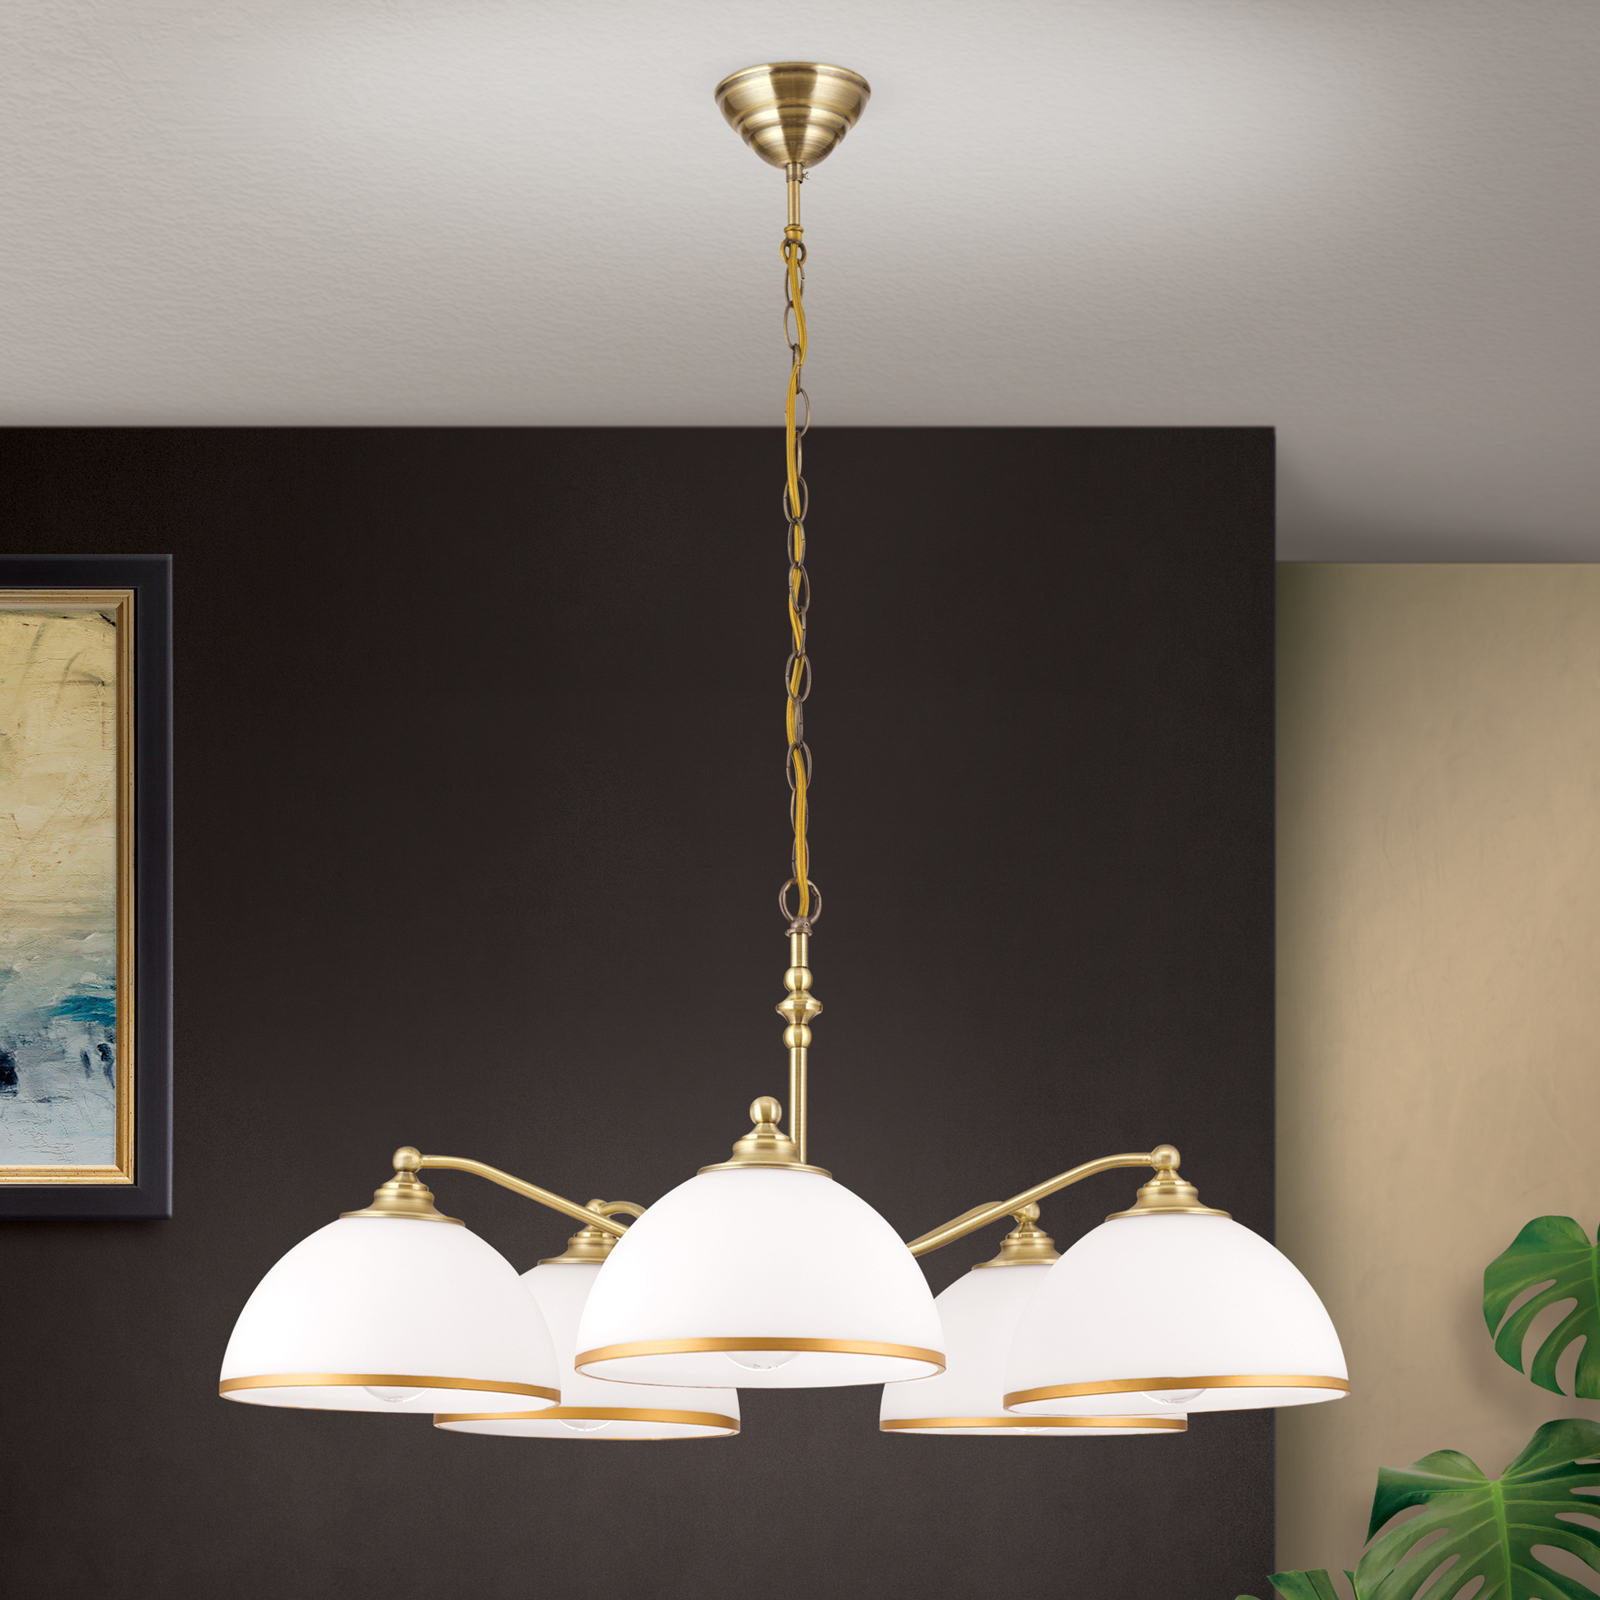 Old Lamp pendant light chain suspension, 5-bulb